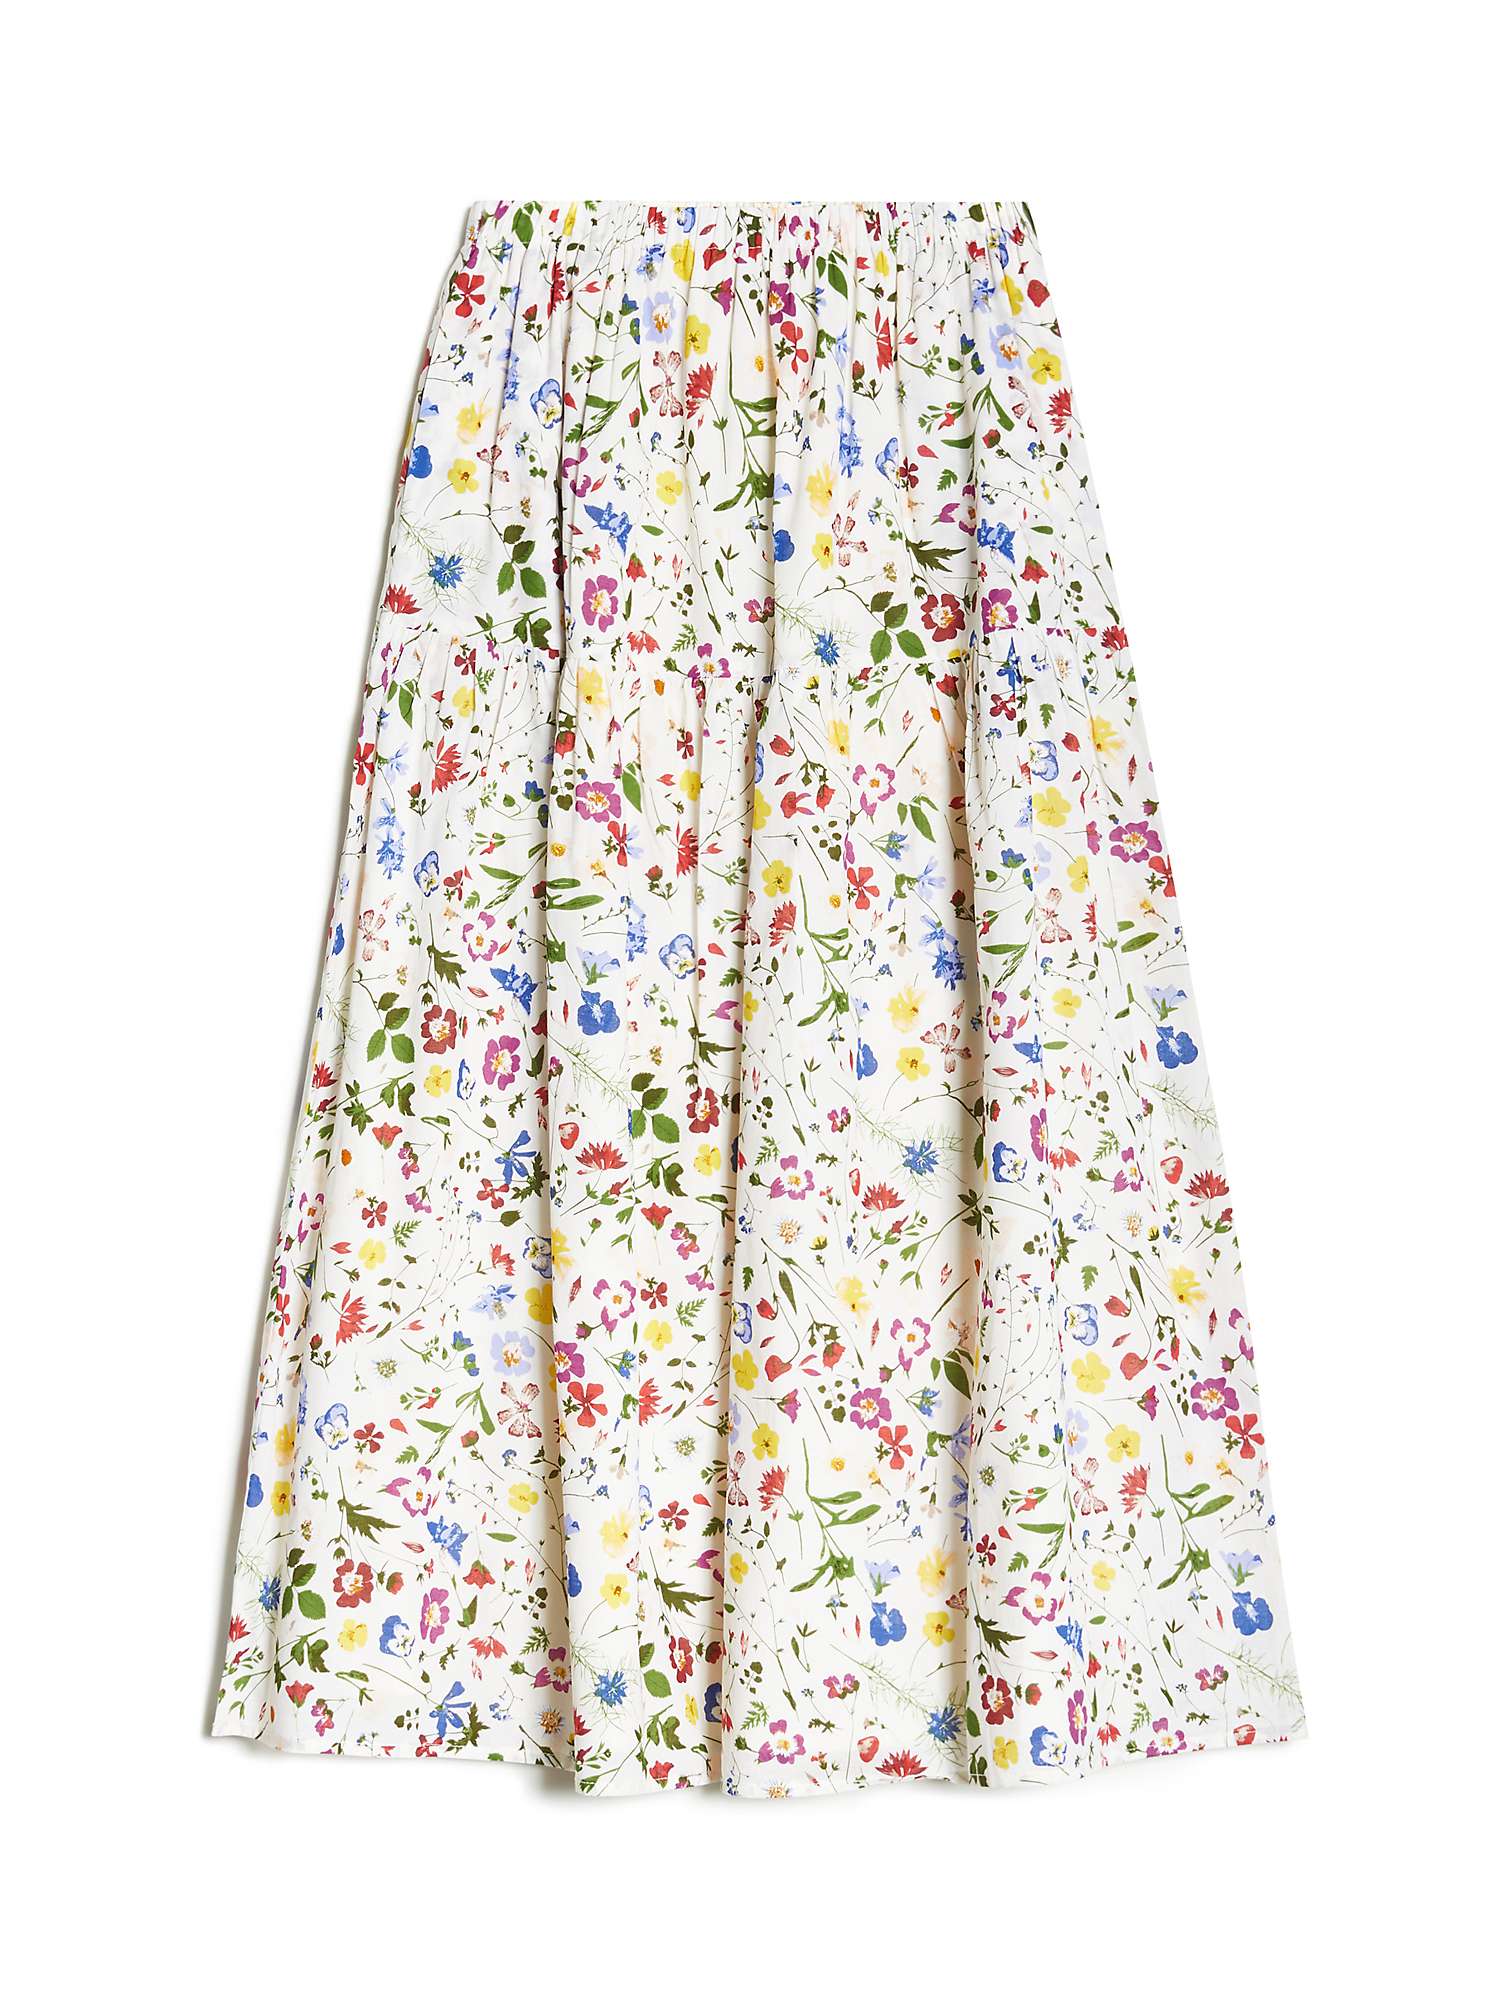 Buy Albaray Buttercup Pressed Floral Midi Skirt, Cream/Multi Online at johnlewis.com